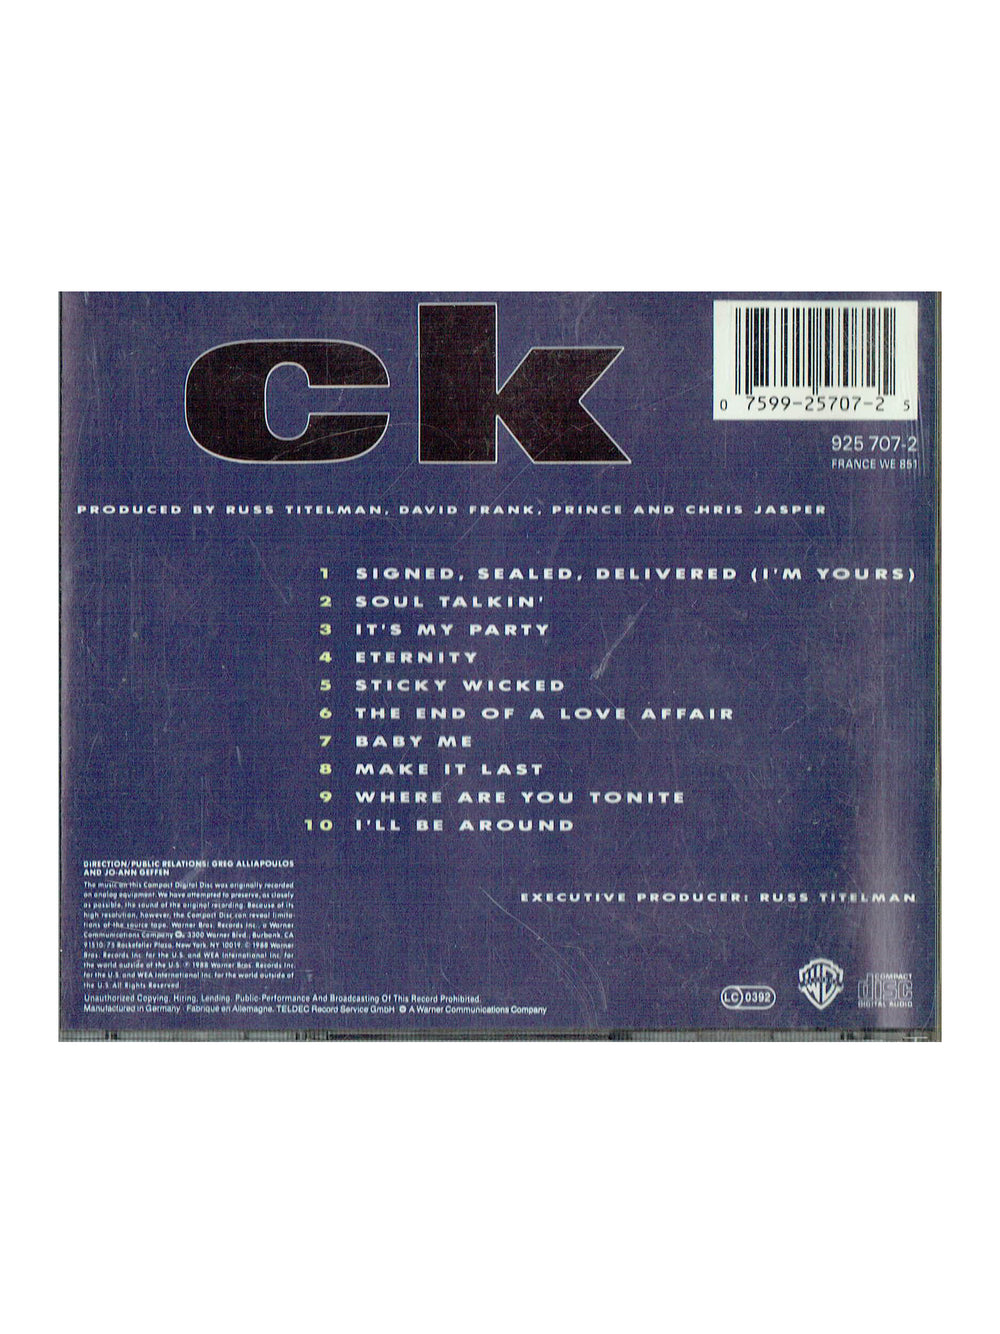 Prince – Chaka Khan C K CD Album 1988 UK EU Release Two Tracks By Prince